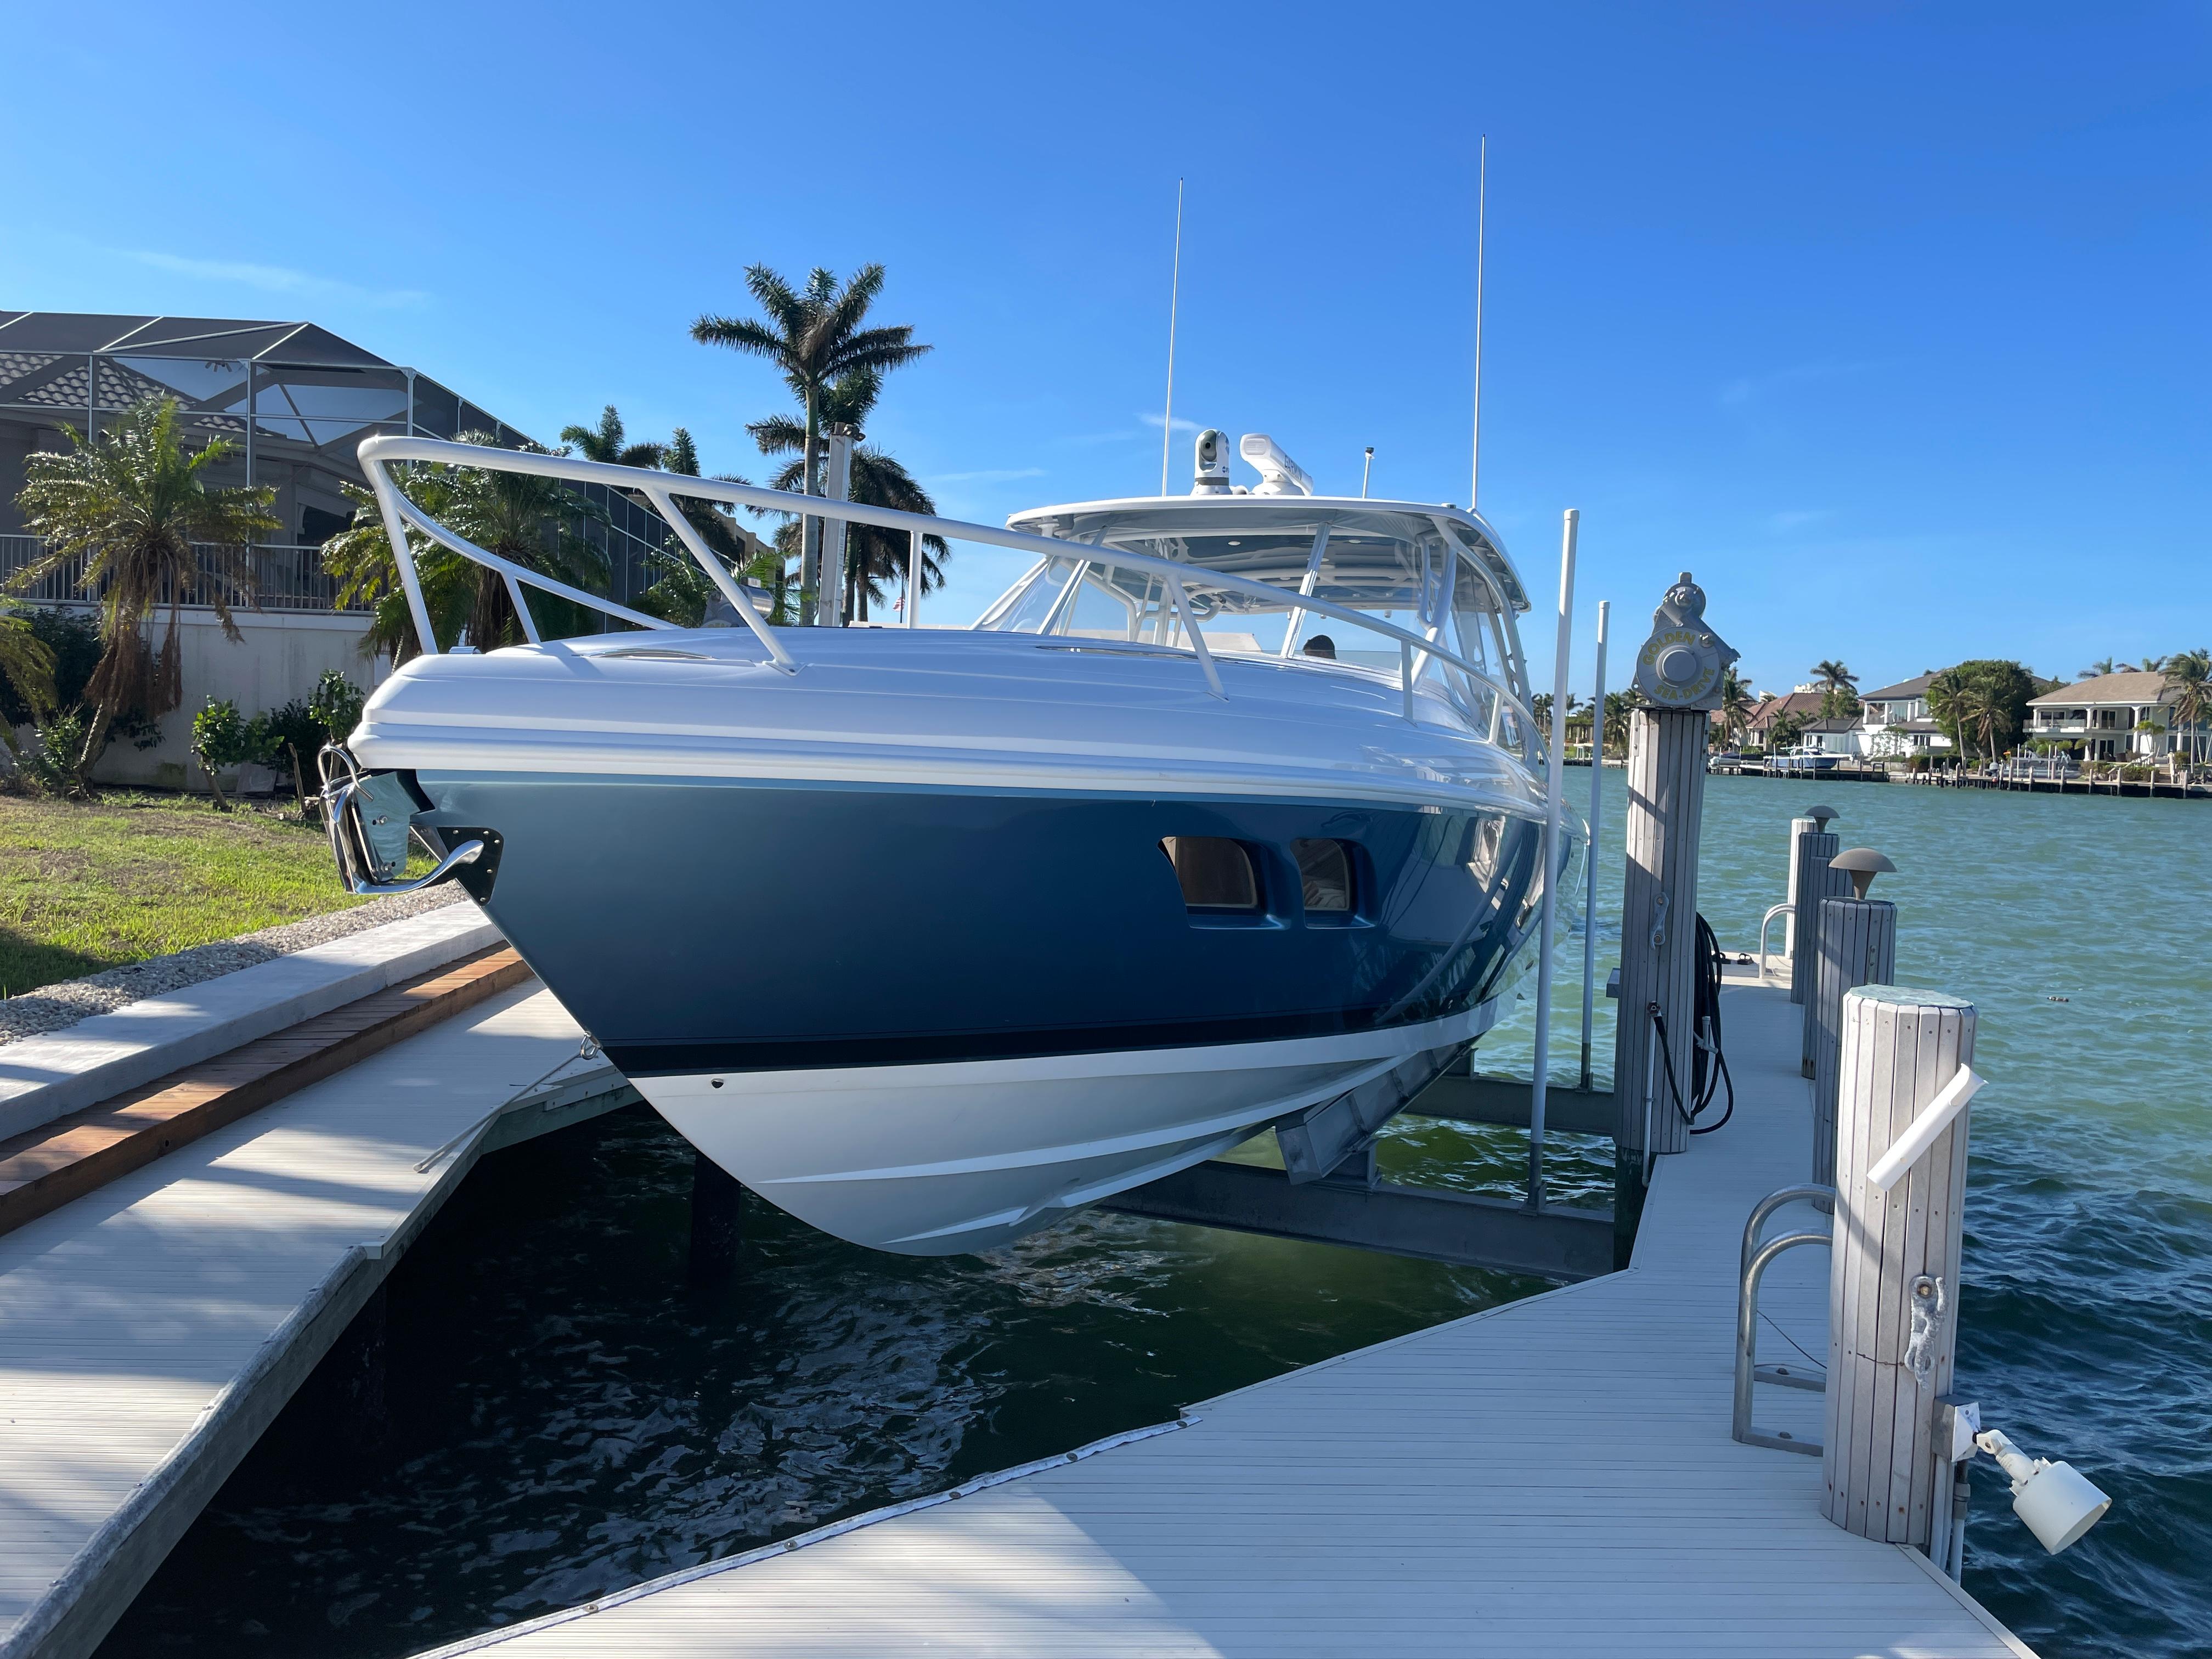 2019 Intrepid 407 Cuddy Barche cabinate cuddy in vendita- YachtWorld